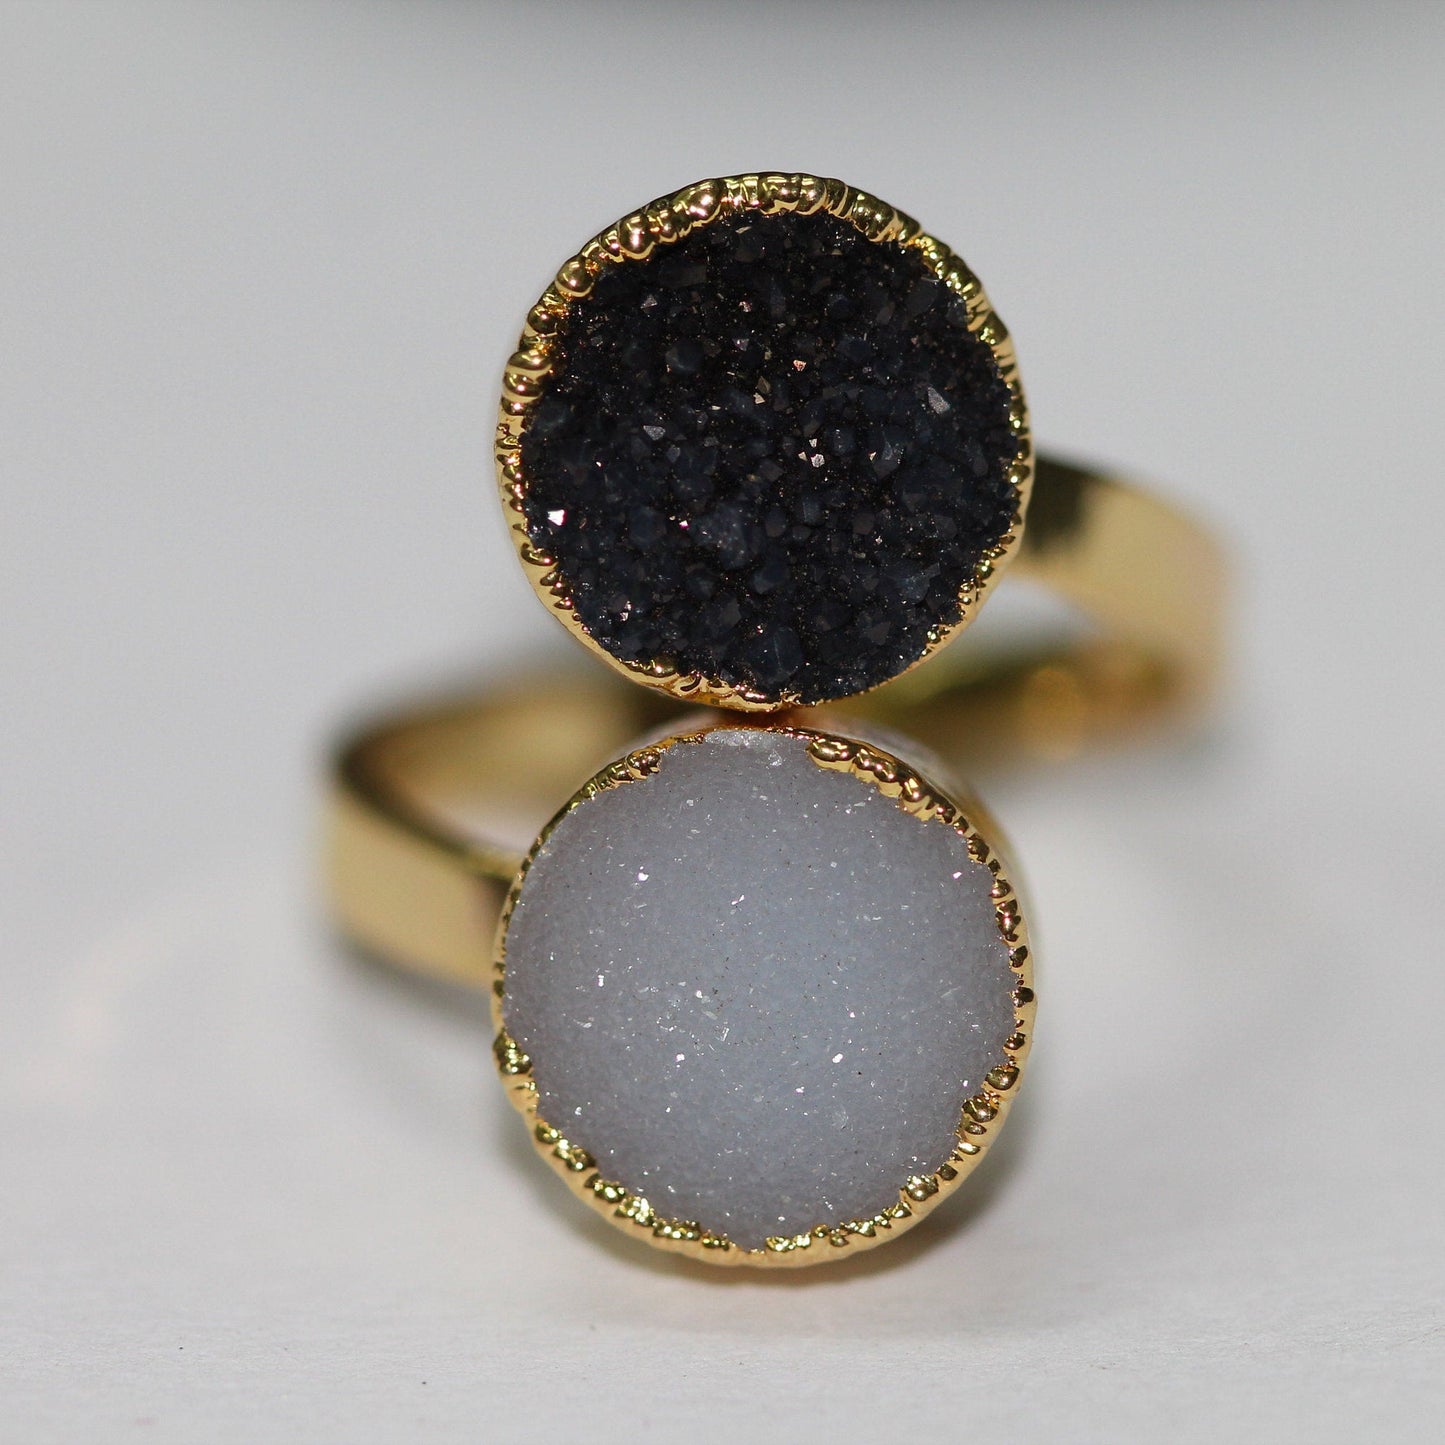 Micron Gold Rings druzy ring, gold ring, natural gemstone ring, gold edged druzy ring, adjustable ring, statement ring - Meena Design